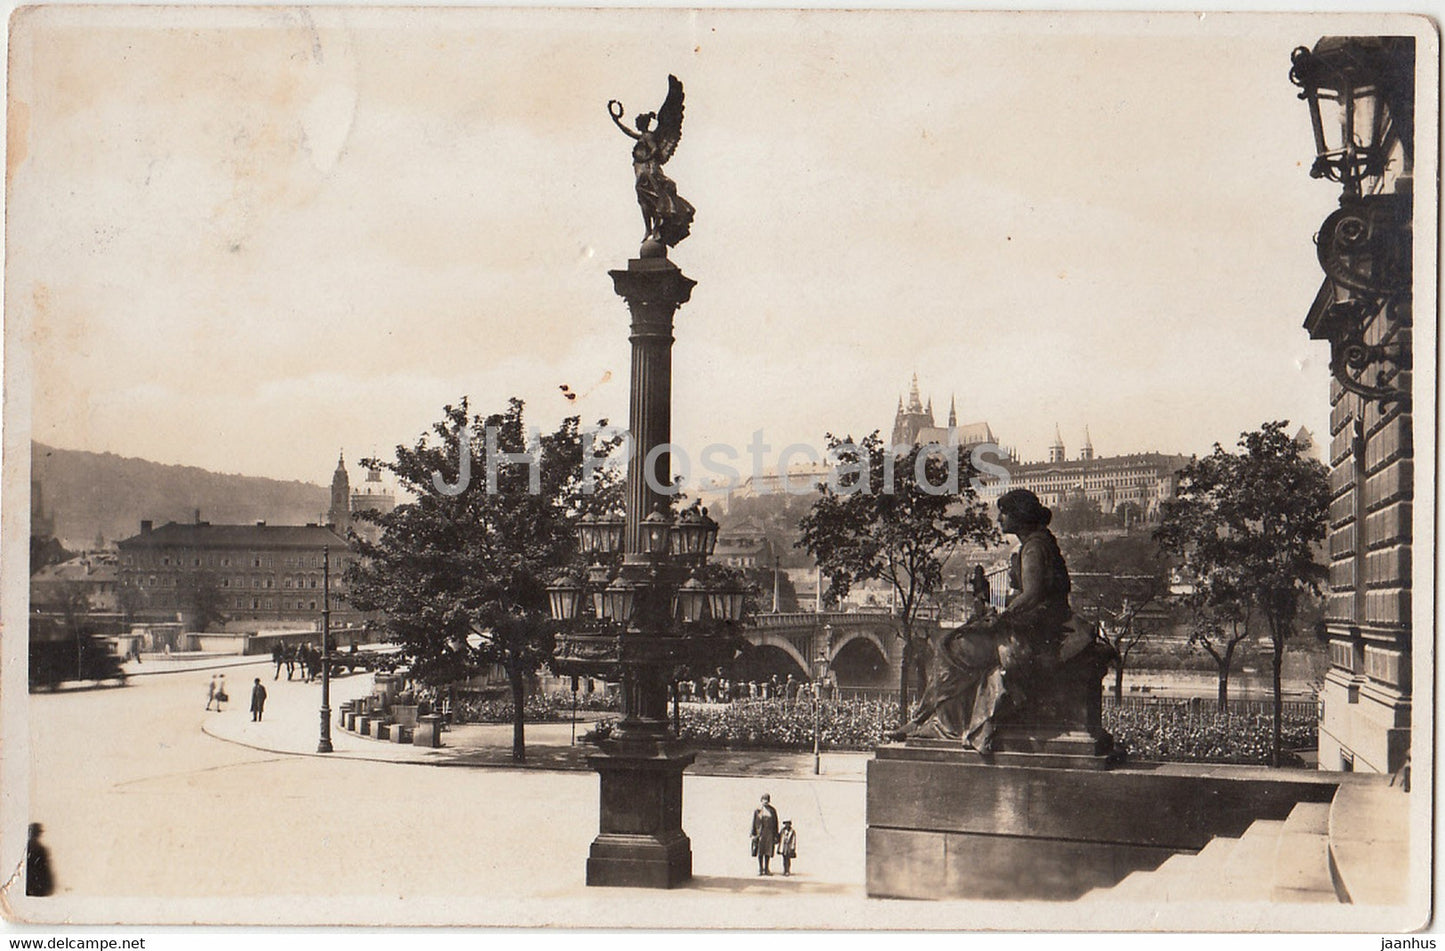 Praha - Prague - Hradcany - Castle - old postcard -  1931 - Czechoslovakia - Czech Republic - used - JH Postcards